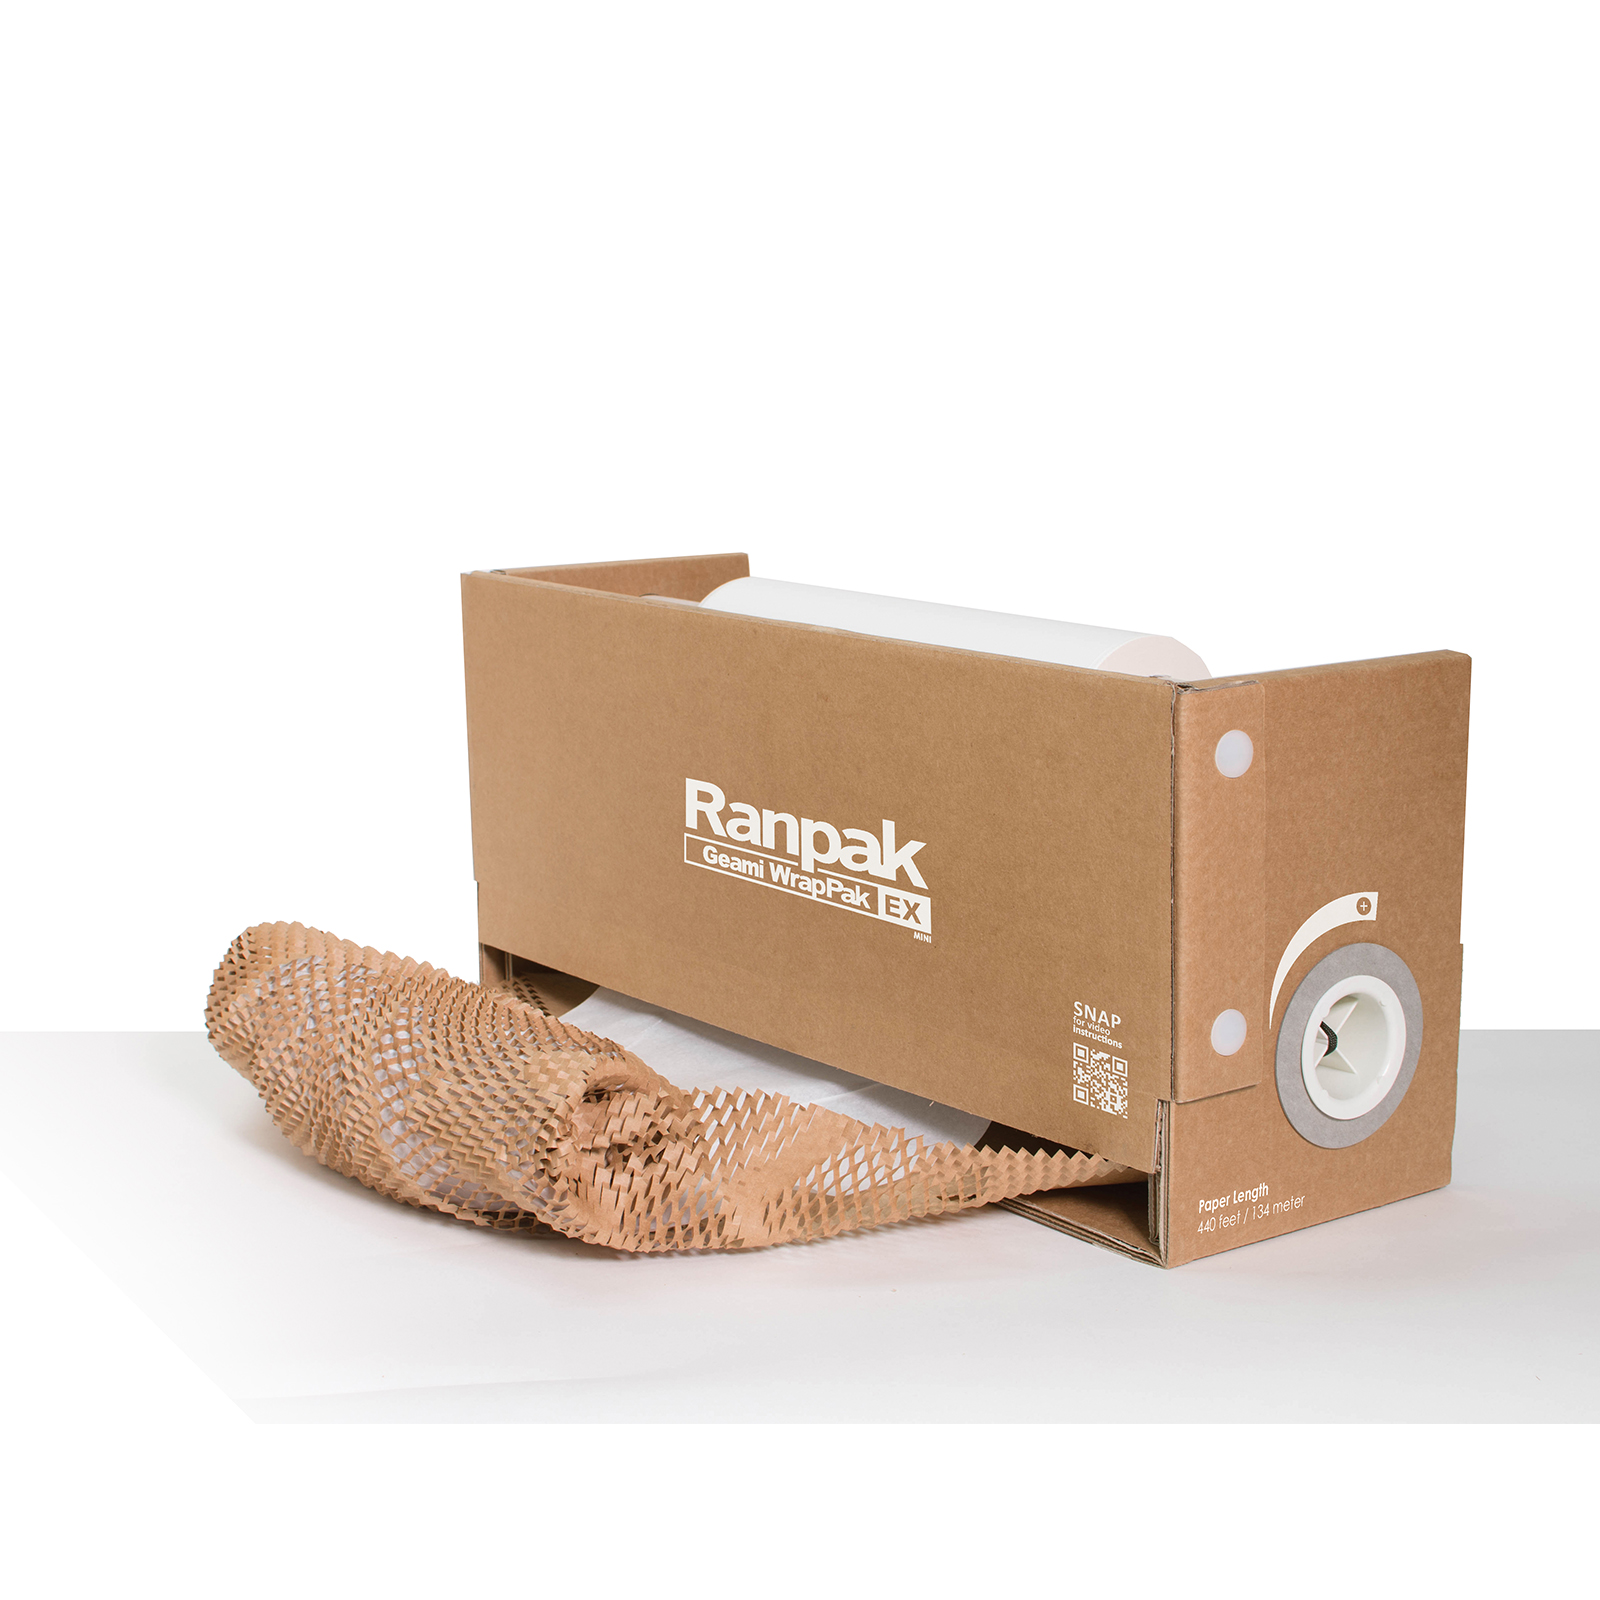 Ranpak Geami 50.8cm x 82m honeycomb paper with tissue paper inlay EXBOX mini disposable box dispenser